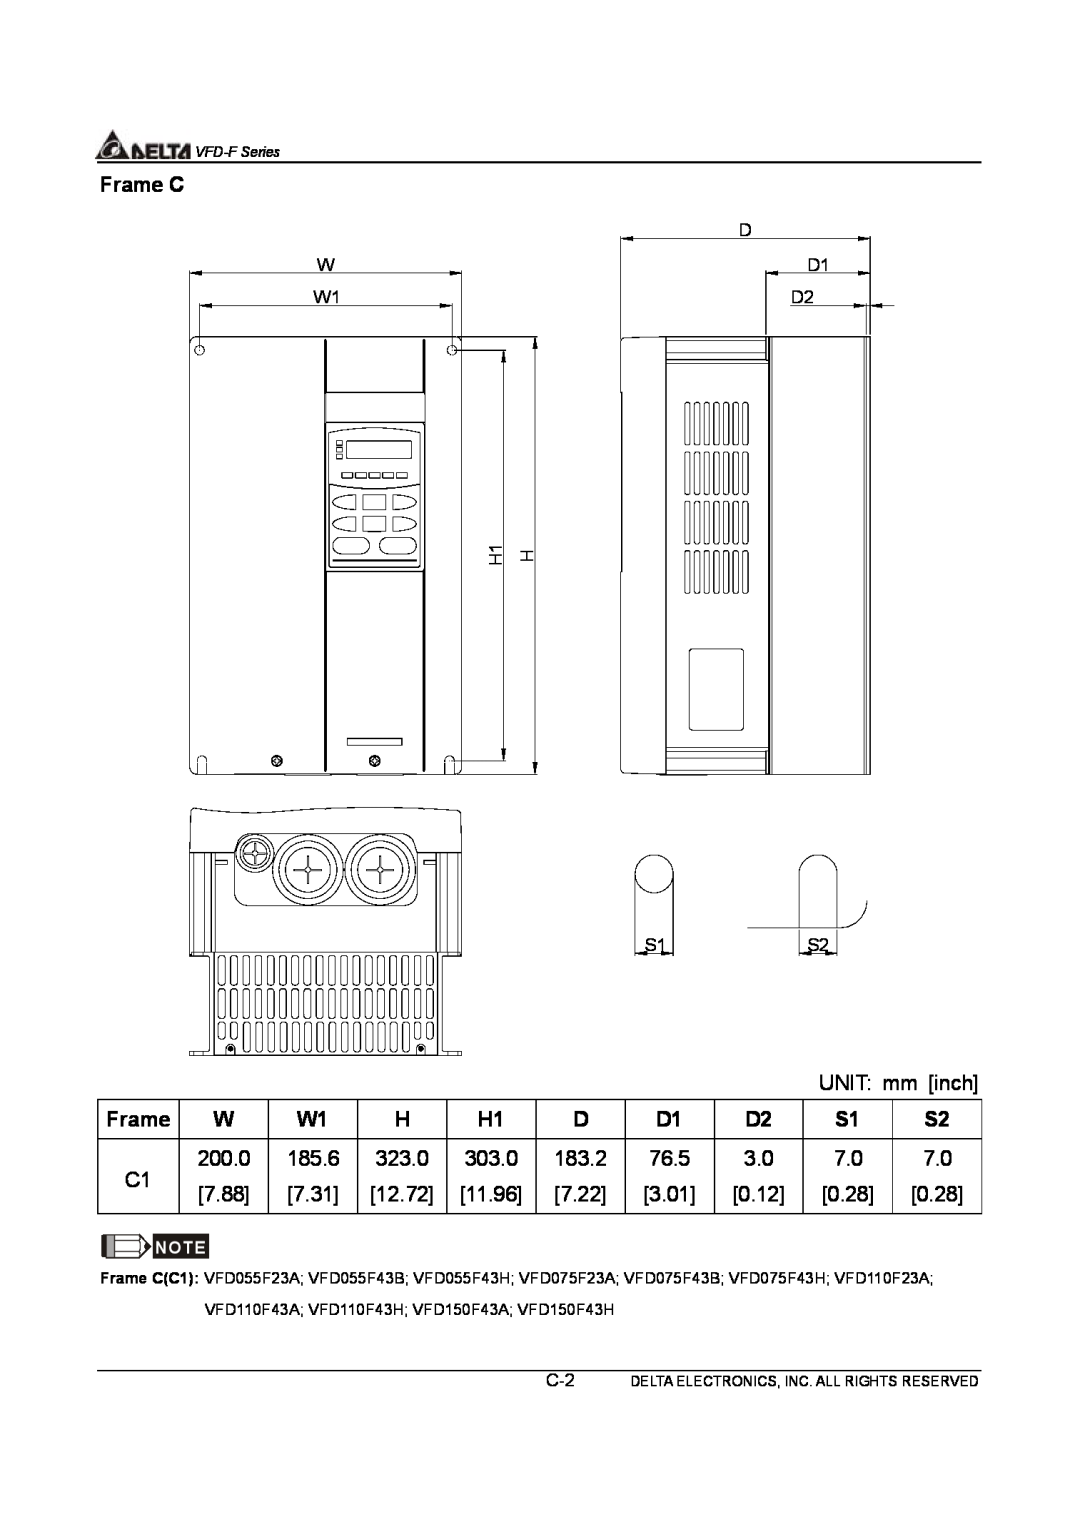 Delta Electronics VFD-F Series manual Frame C, VFD110F43A VFD110F43H VFD150F43A VFD150F43H 